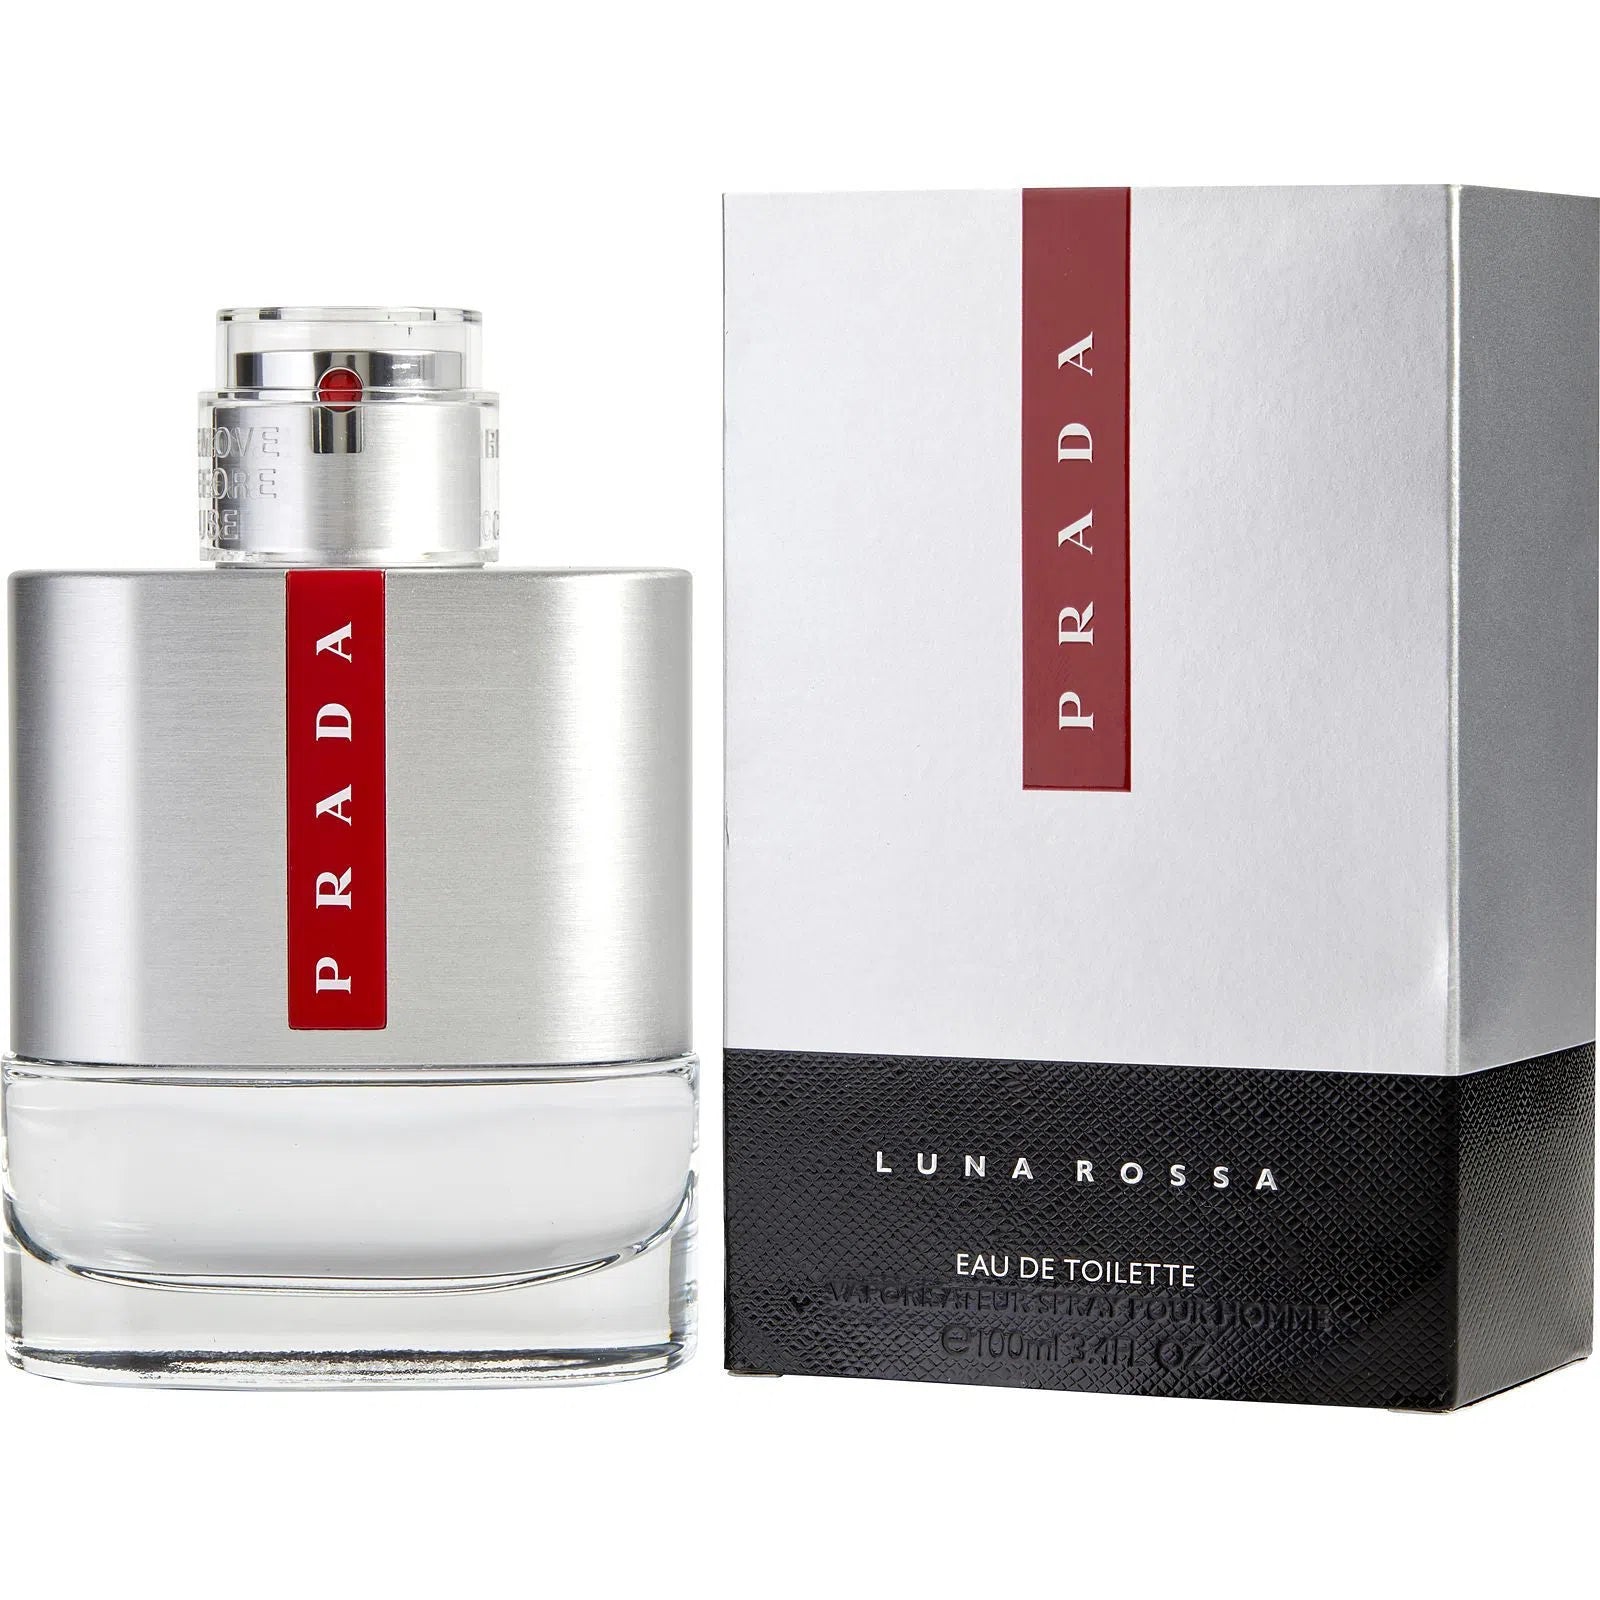 Perfume Prada Luna Rossa EDT (M) / 100 ml - 3614273478755- Prive Perfumes Honduras